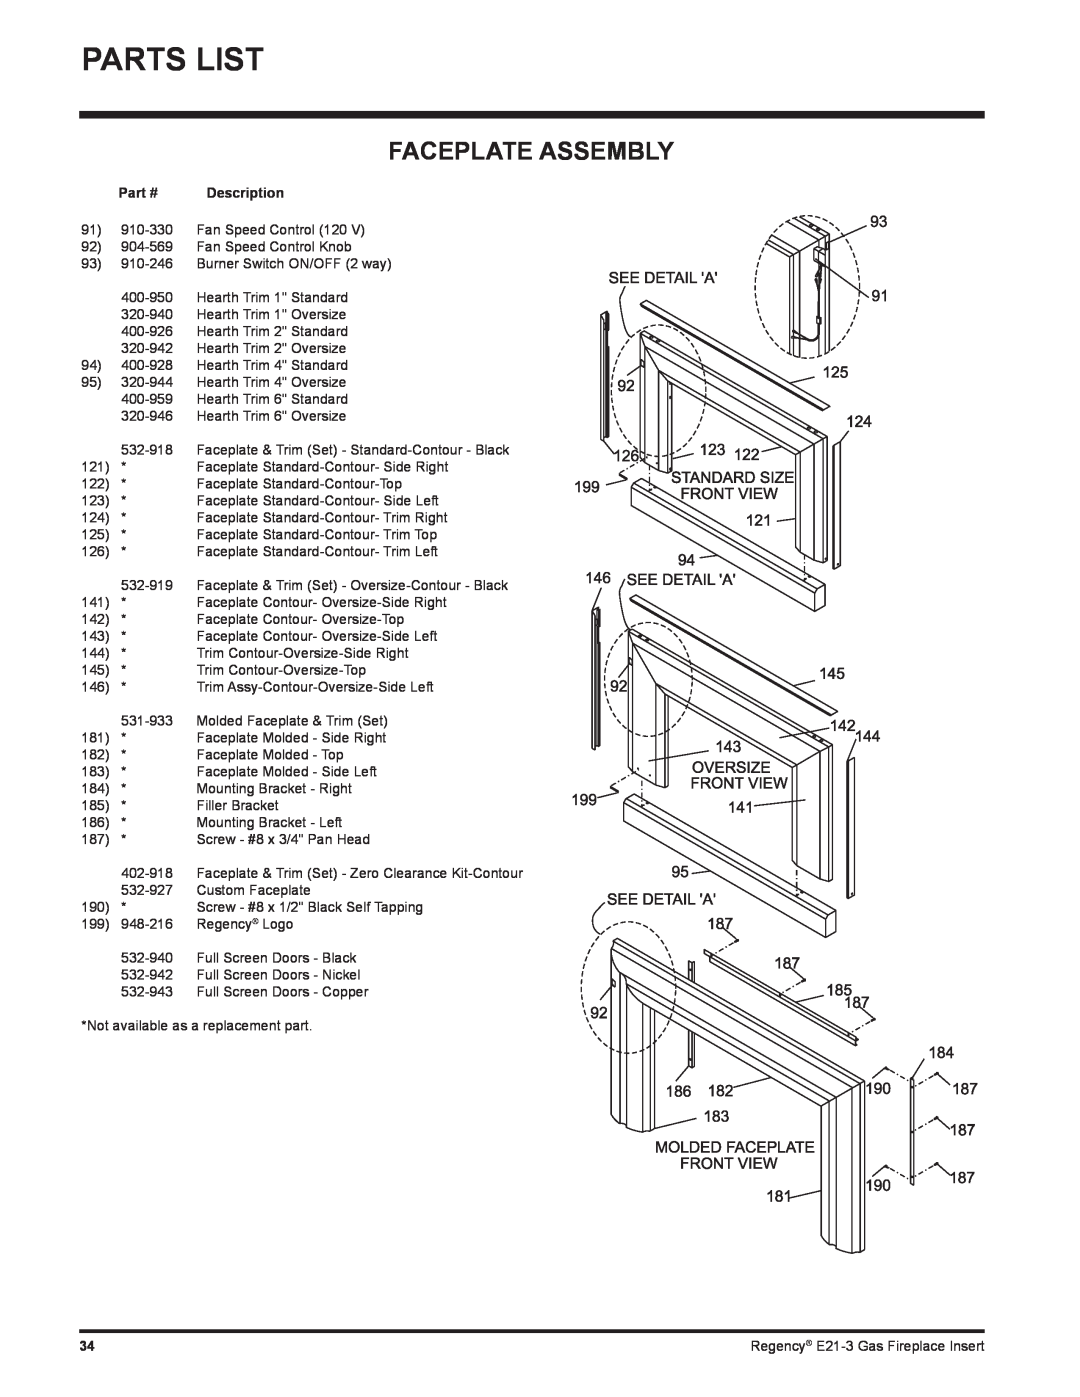 Regency E21-NG3, E21-LP3 installation manual Parts List, Faceplate Assembly, Description 